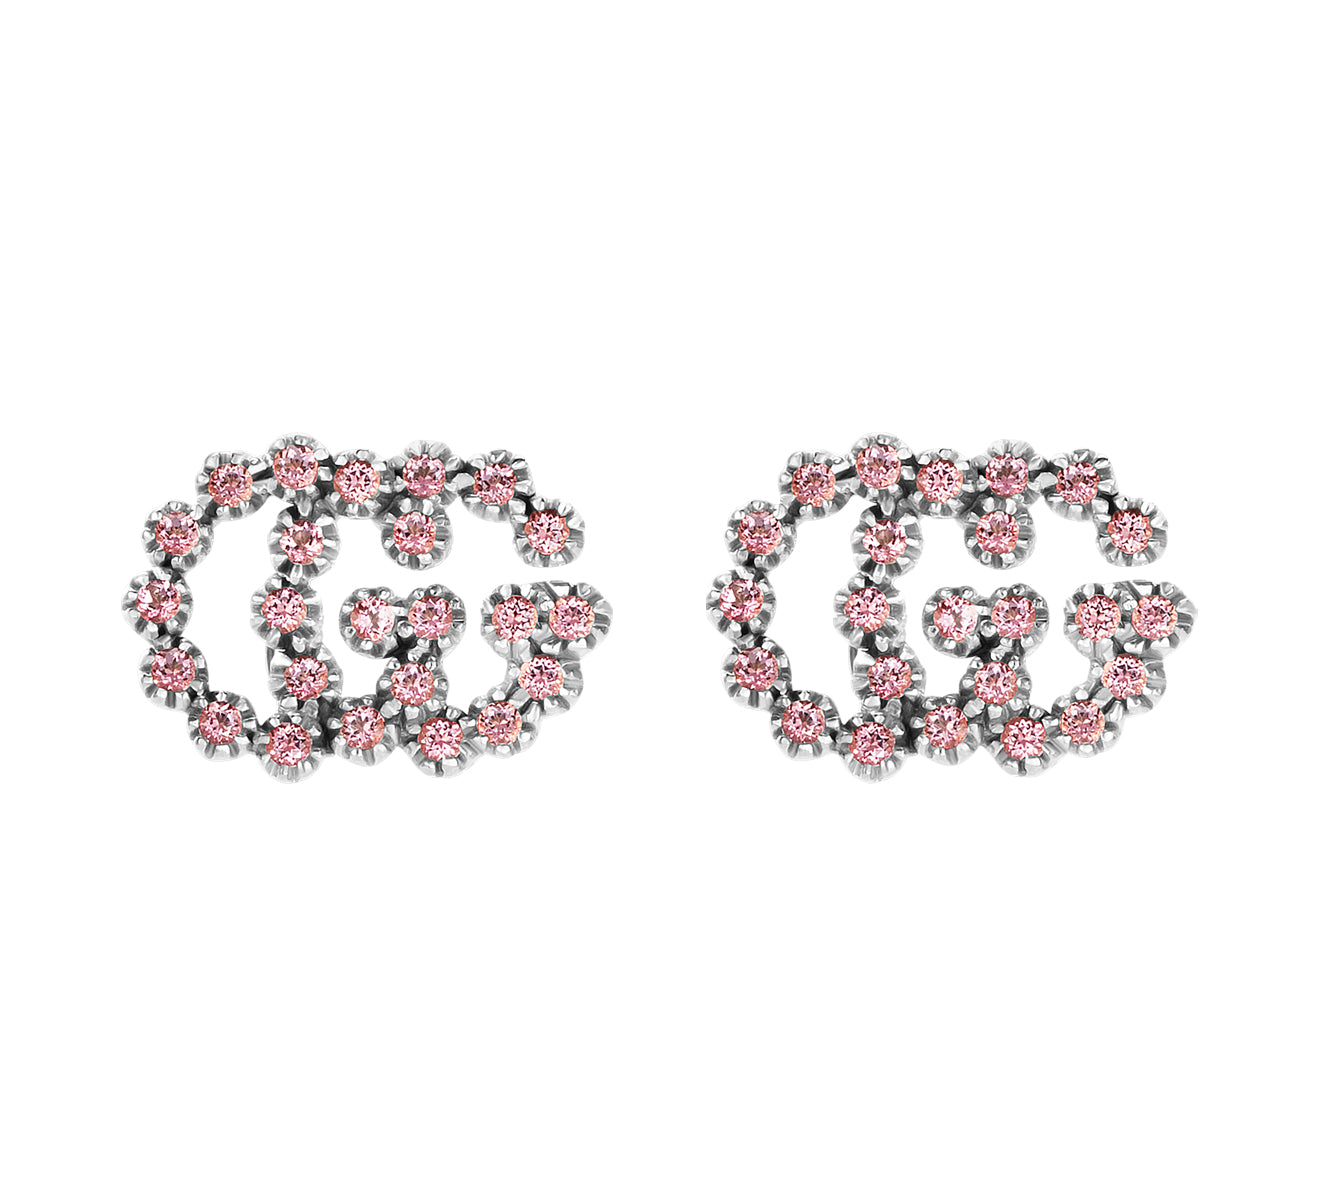 Gucci earrings | Earrings, Gucci, Accessories